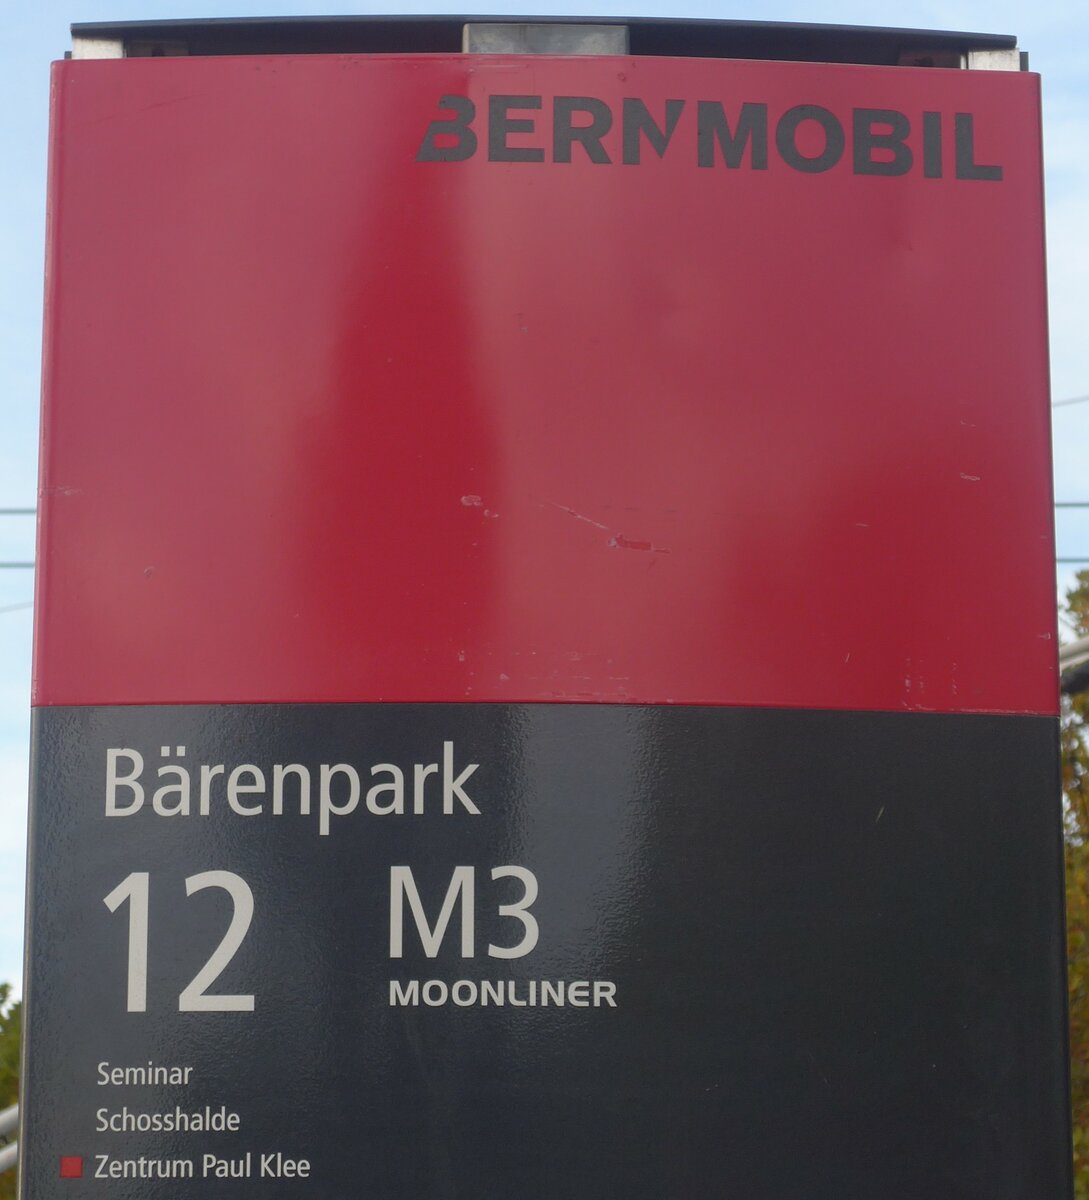 (210'481) - BERNMOBIL-Haltestellenschild - Bern, Brenpark - am 20. Oktober 2019